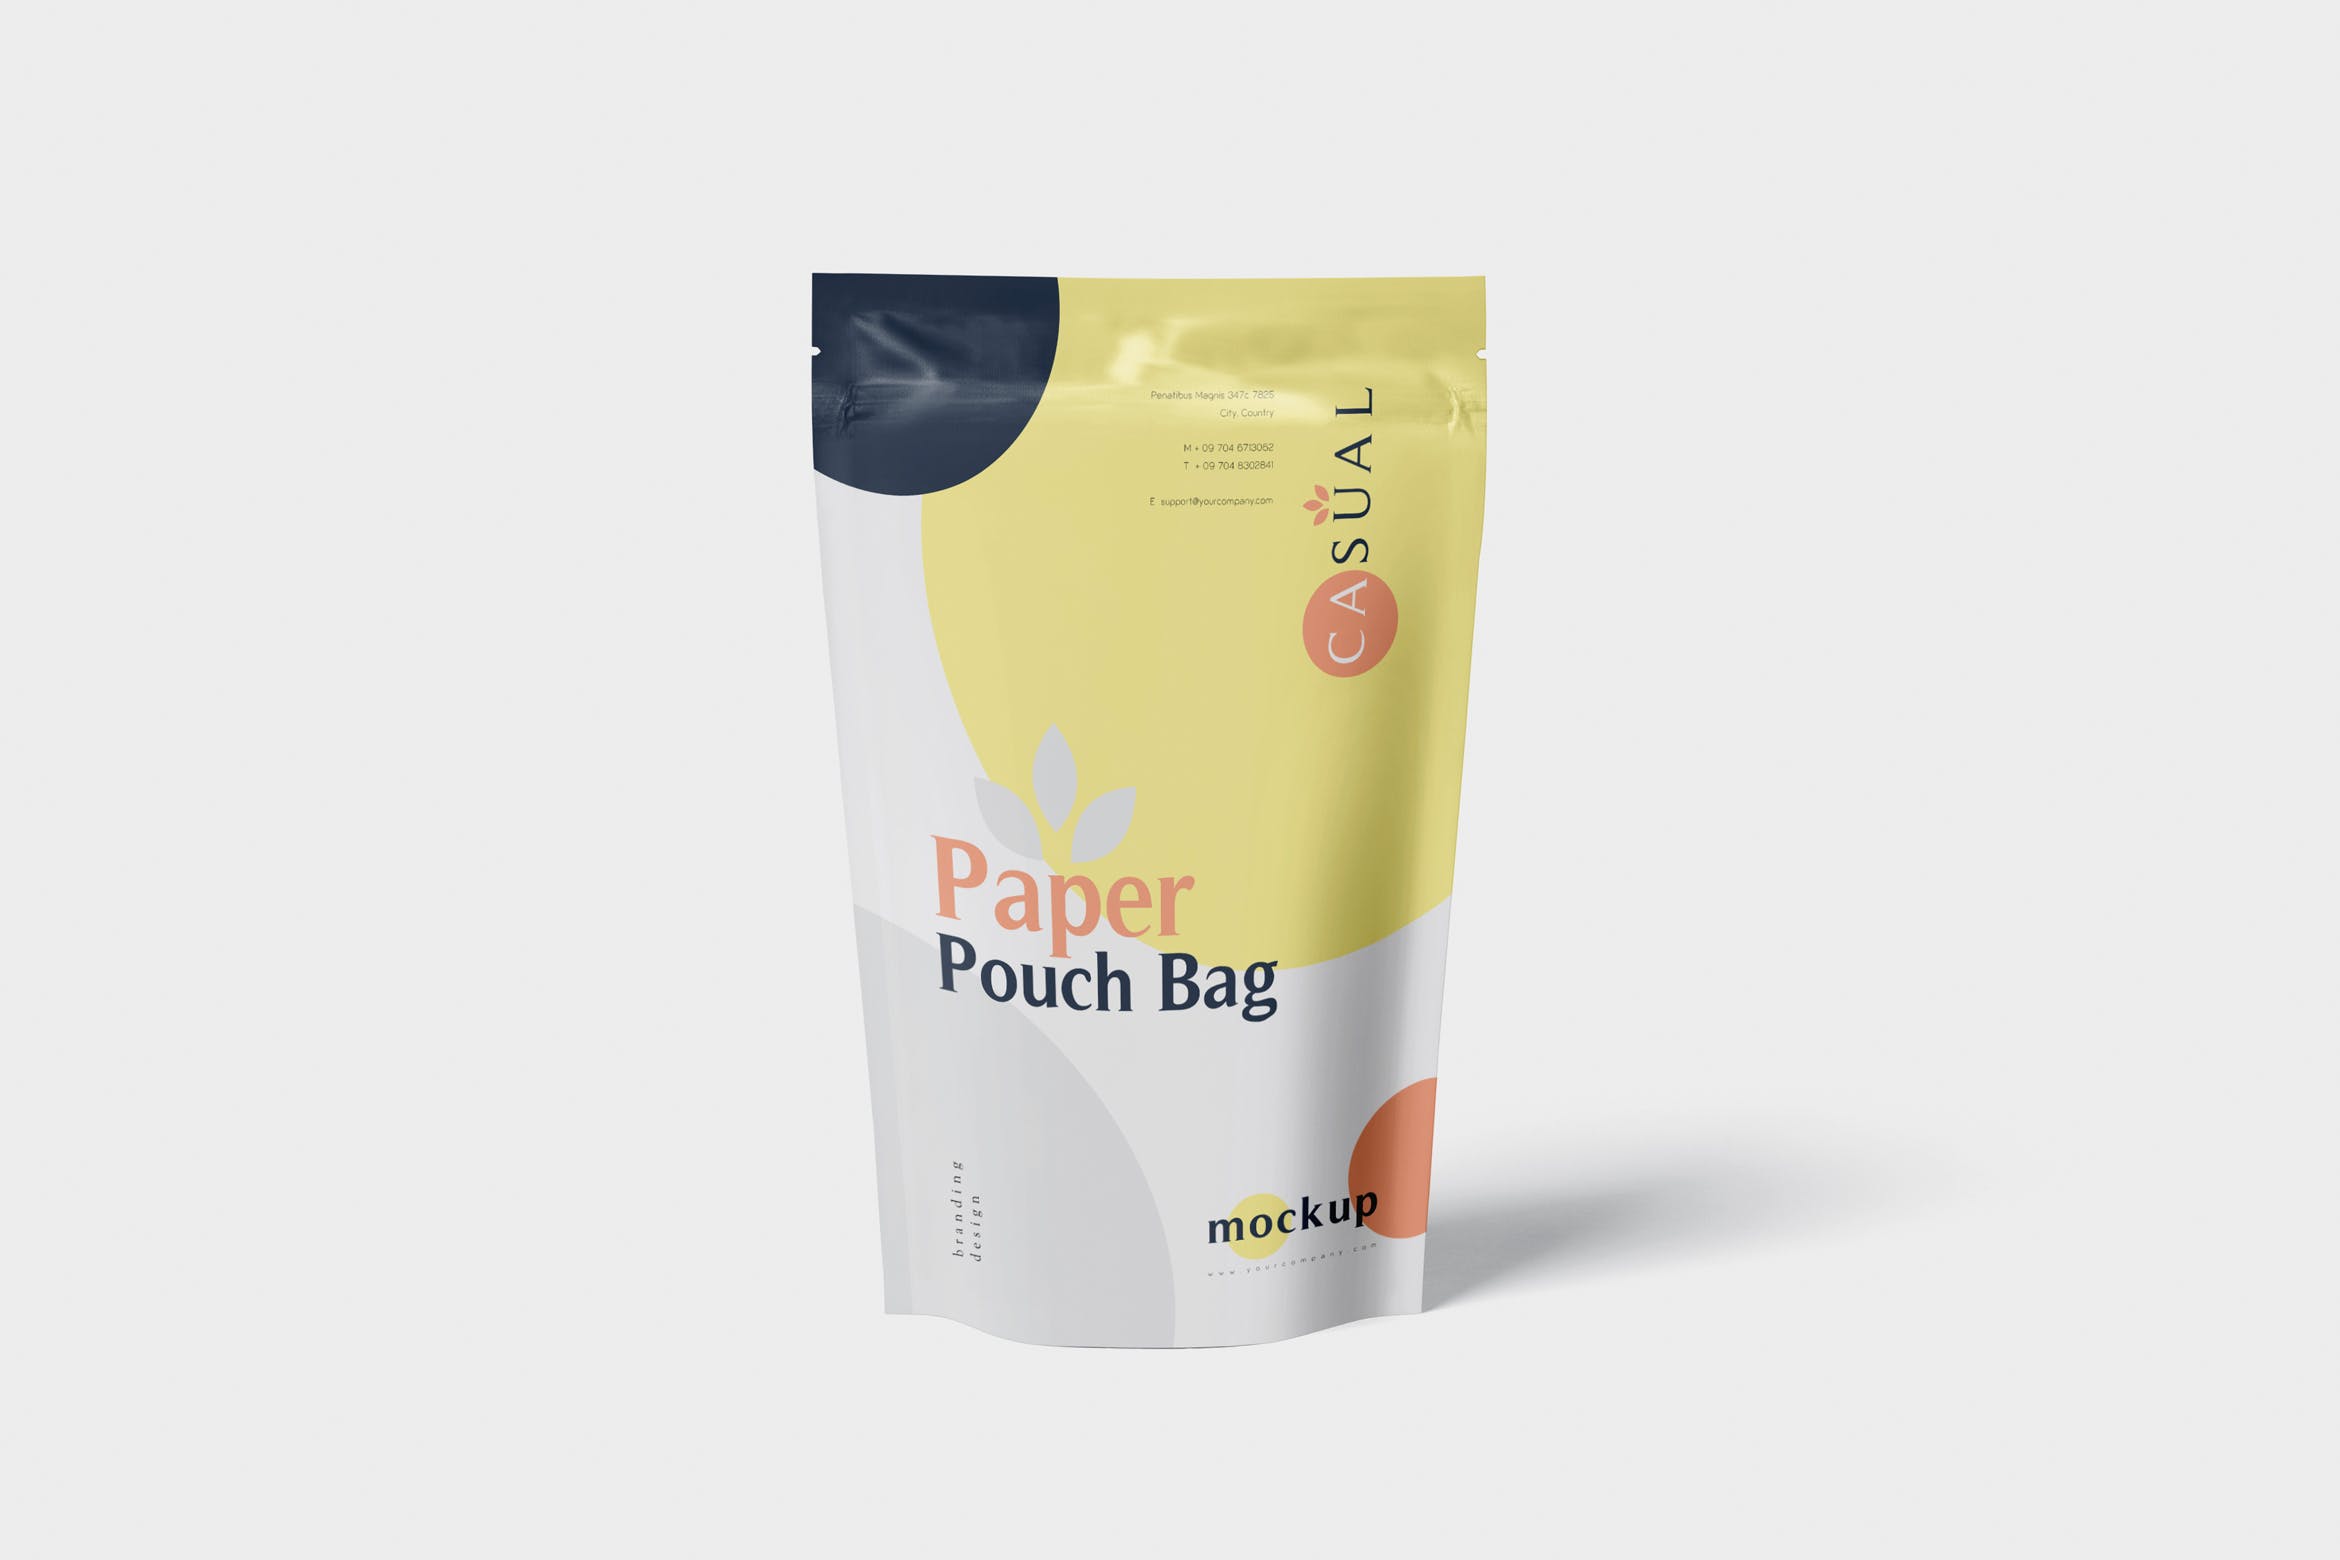 食品自封袋包装设计效果图素材库精选 Paper Pouch Bag Mockup – Large Size插图